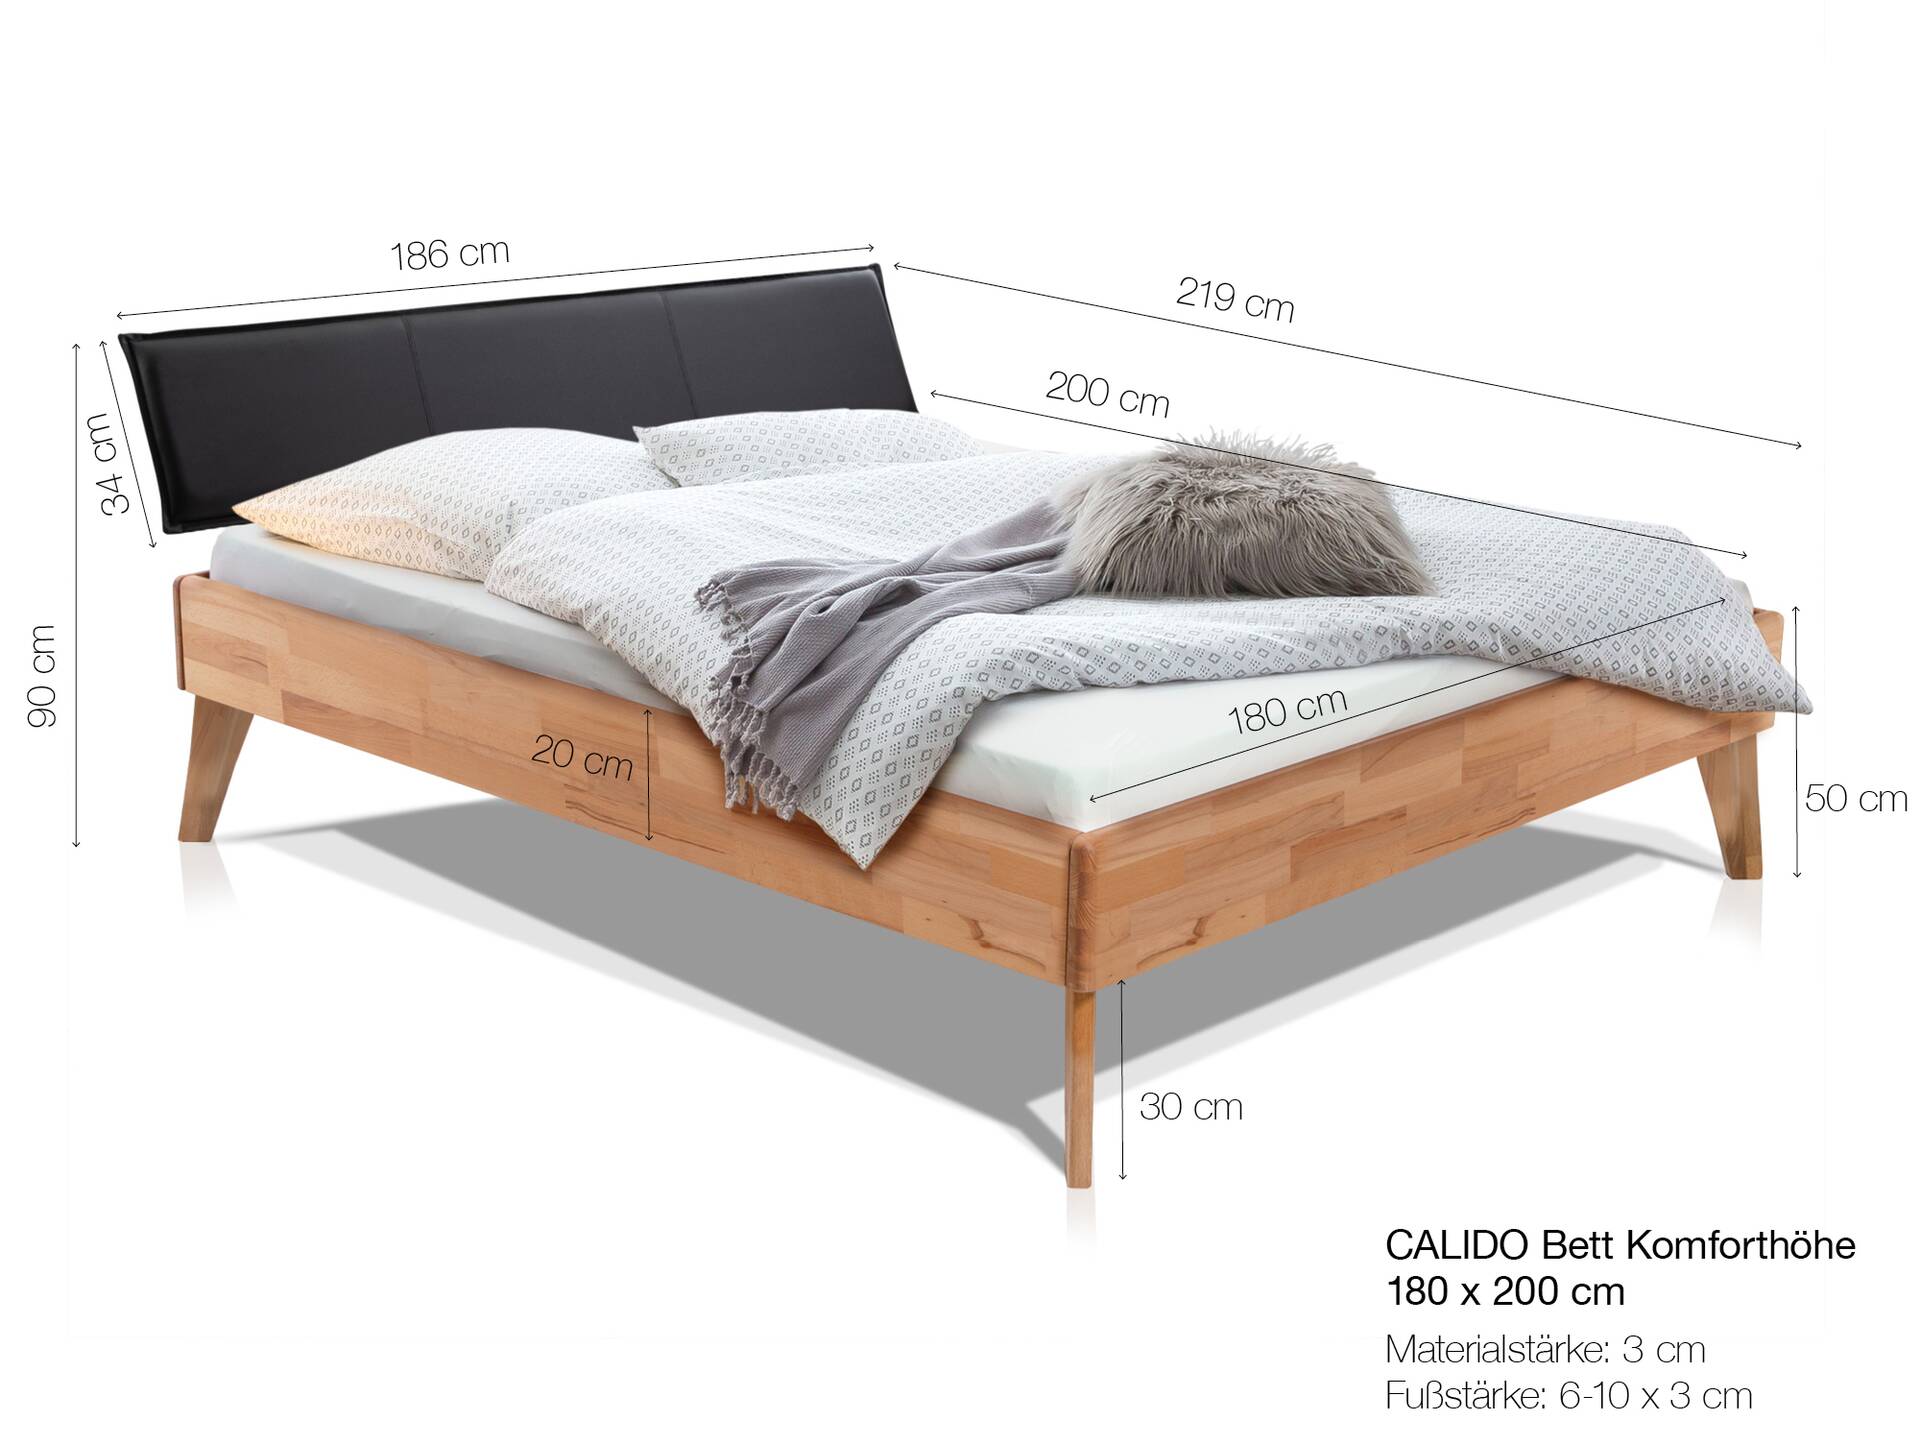 CALIDO 4-Fuß-Bett mit Polster-Kopfteil, Material Massivholz 180 x 200 cm | Buche weiss lackiert | Stoff Anthrazit | Komforthöhe